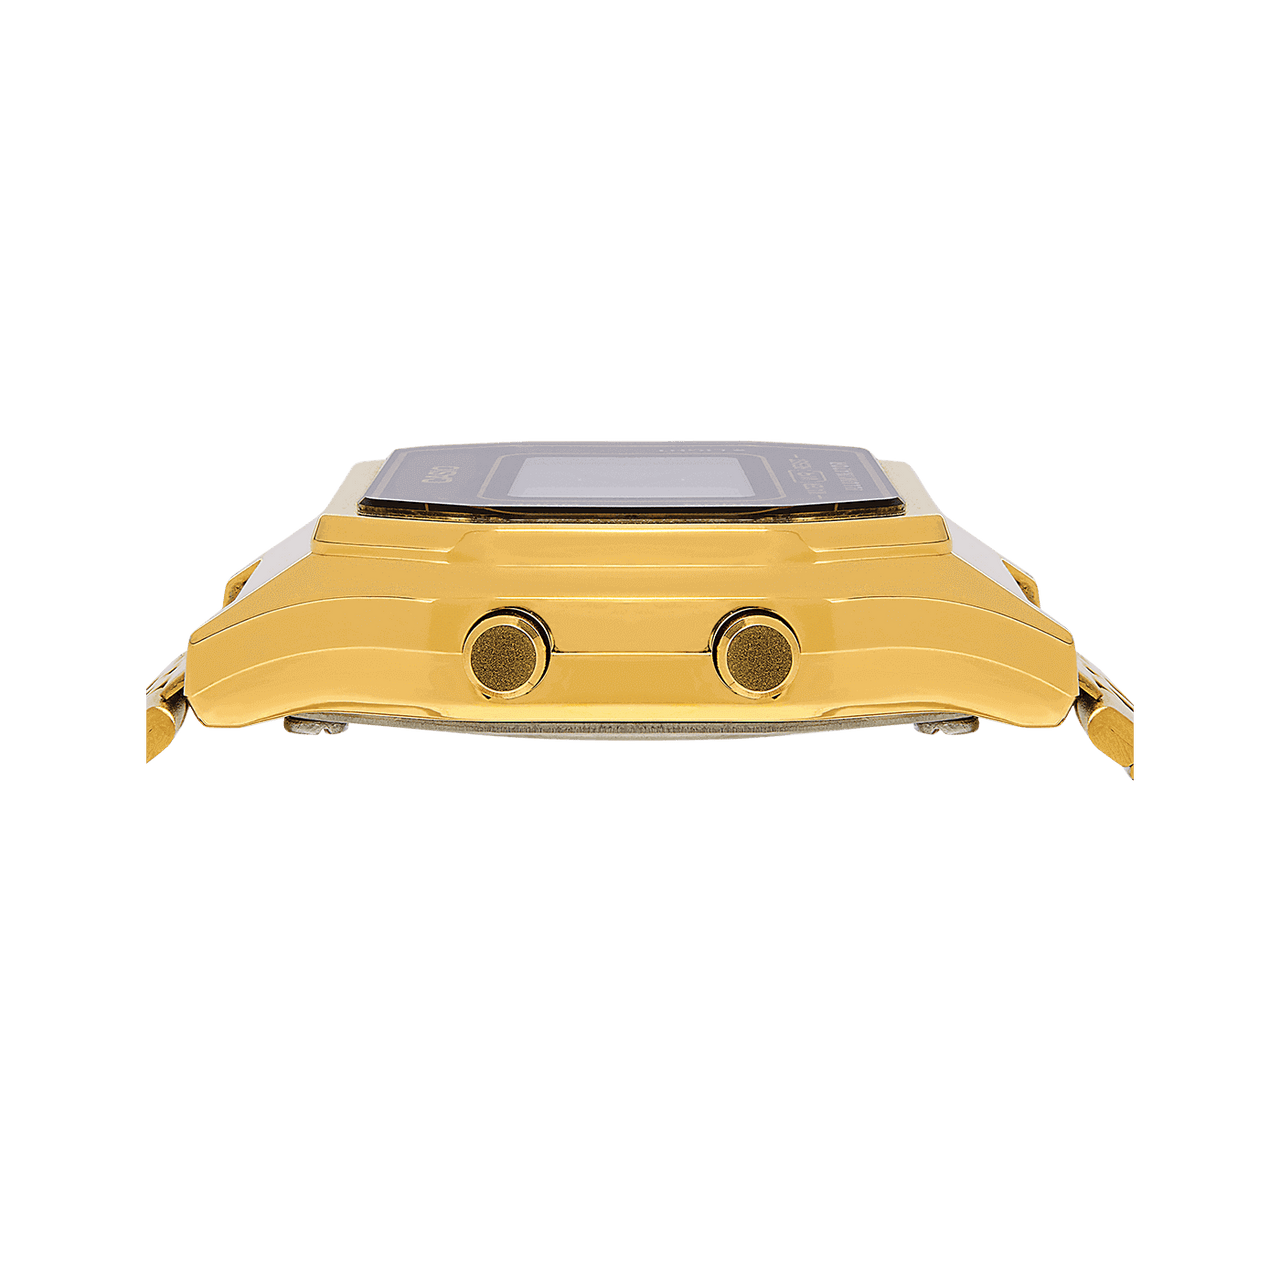 Casio – LA680WEGA – Digitale Mini-Armbanduhr in Gold